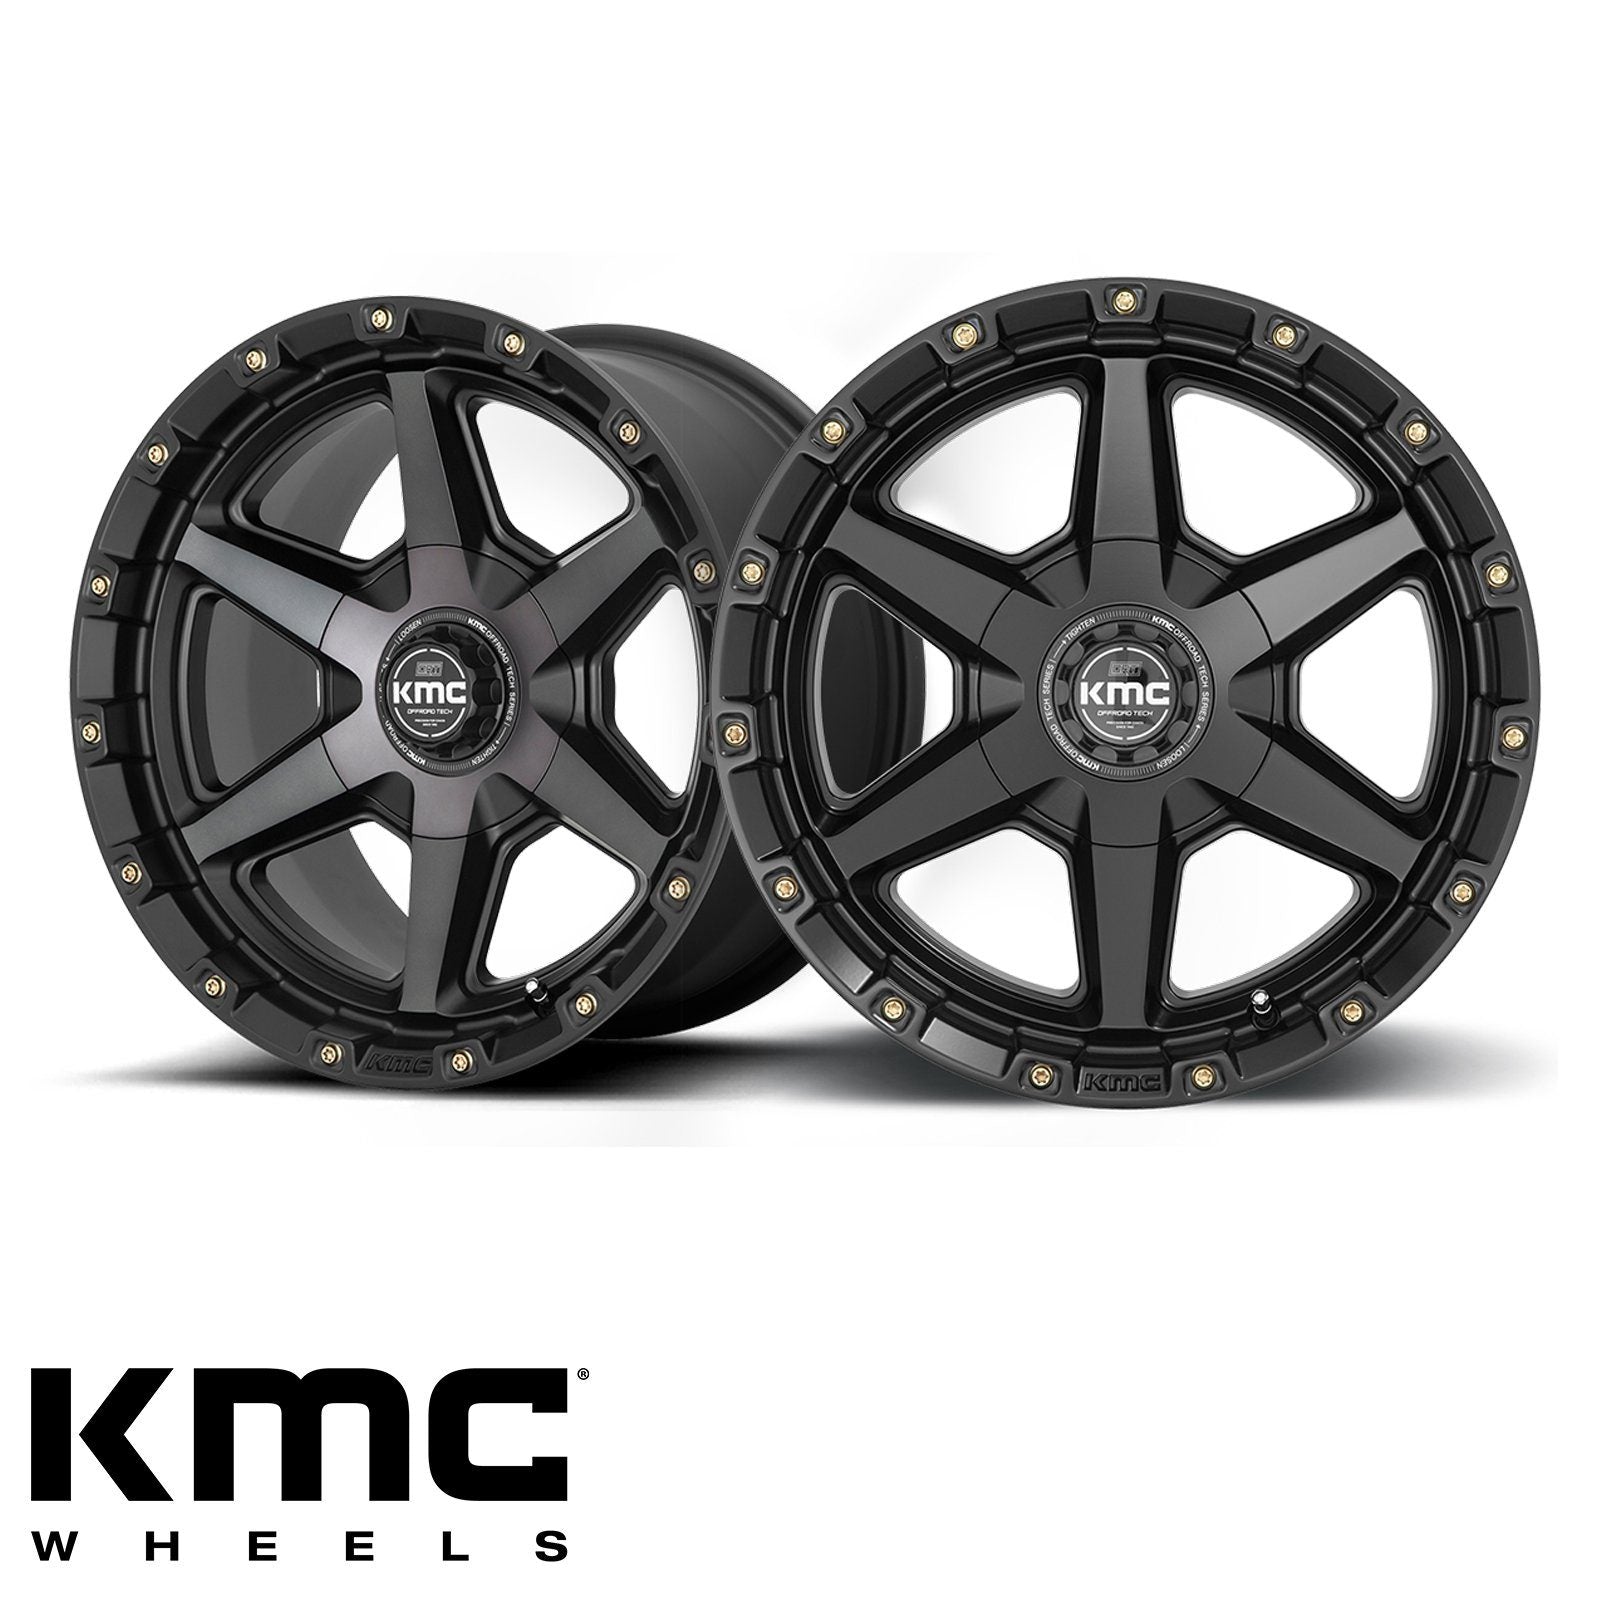 KMC Tempo 20" Wheel KMC Wheels display